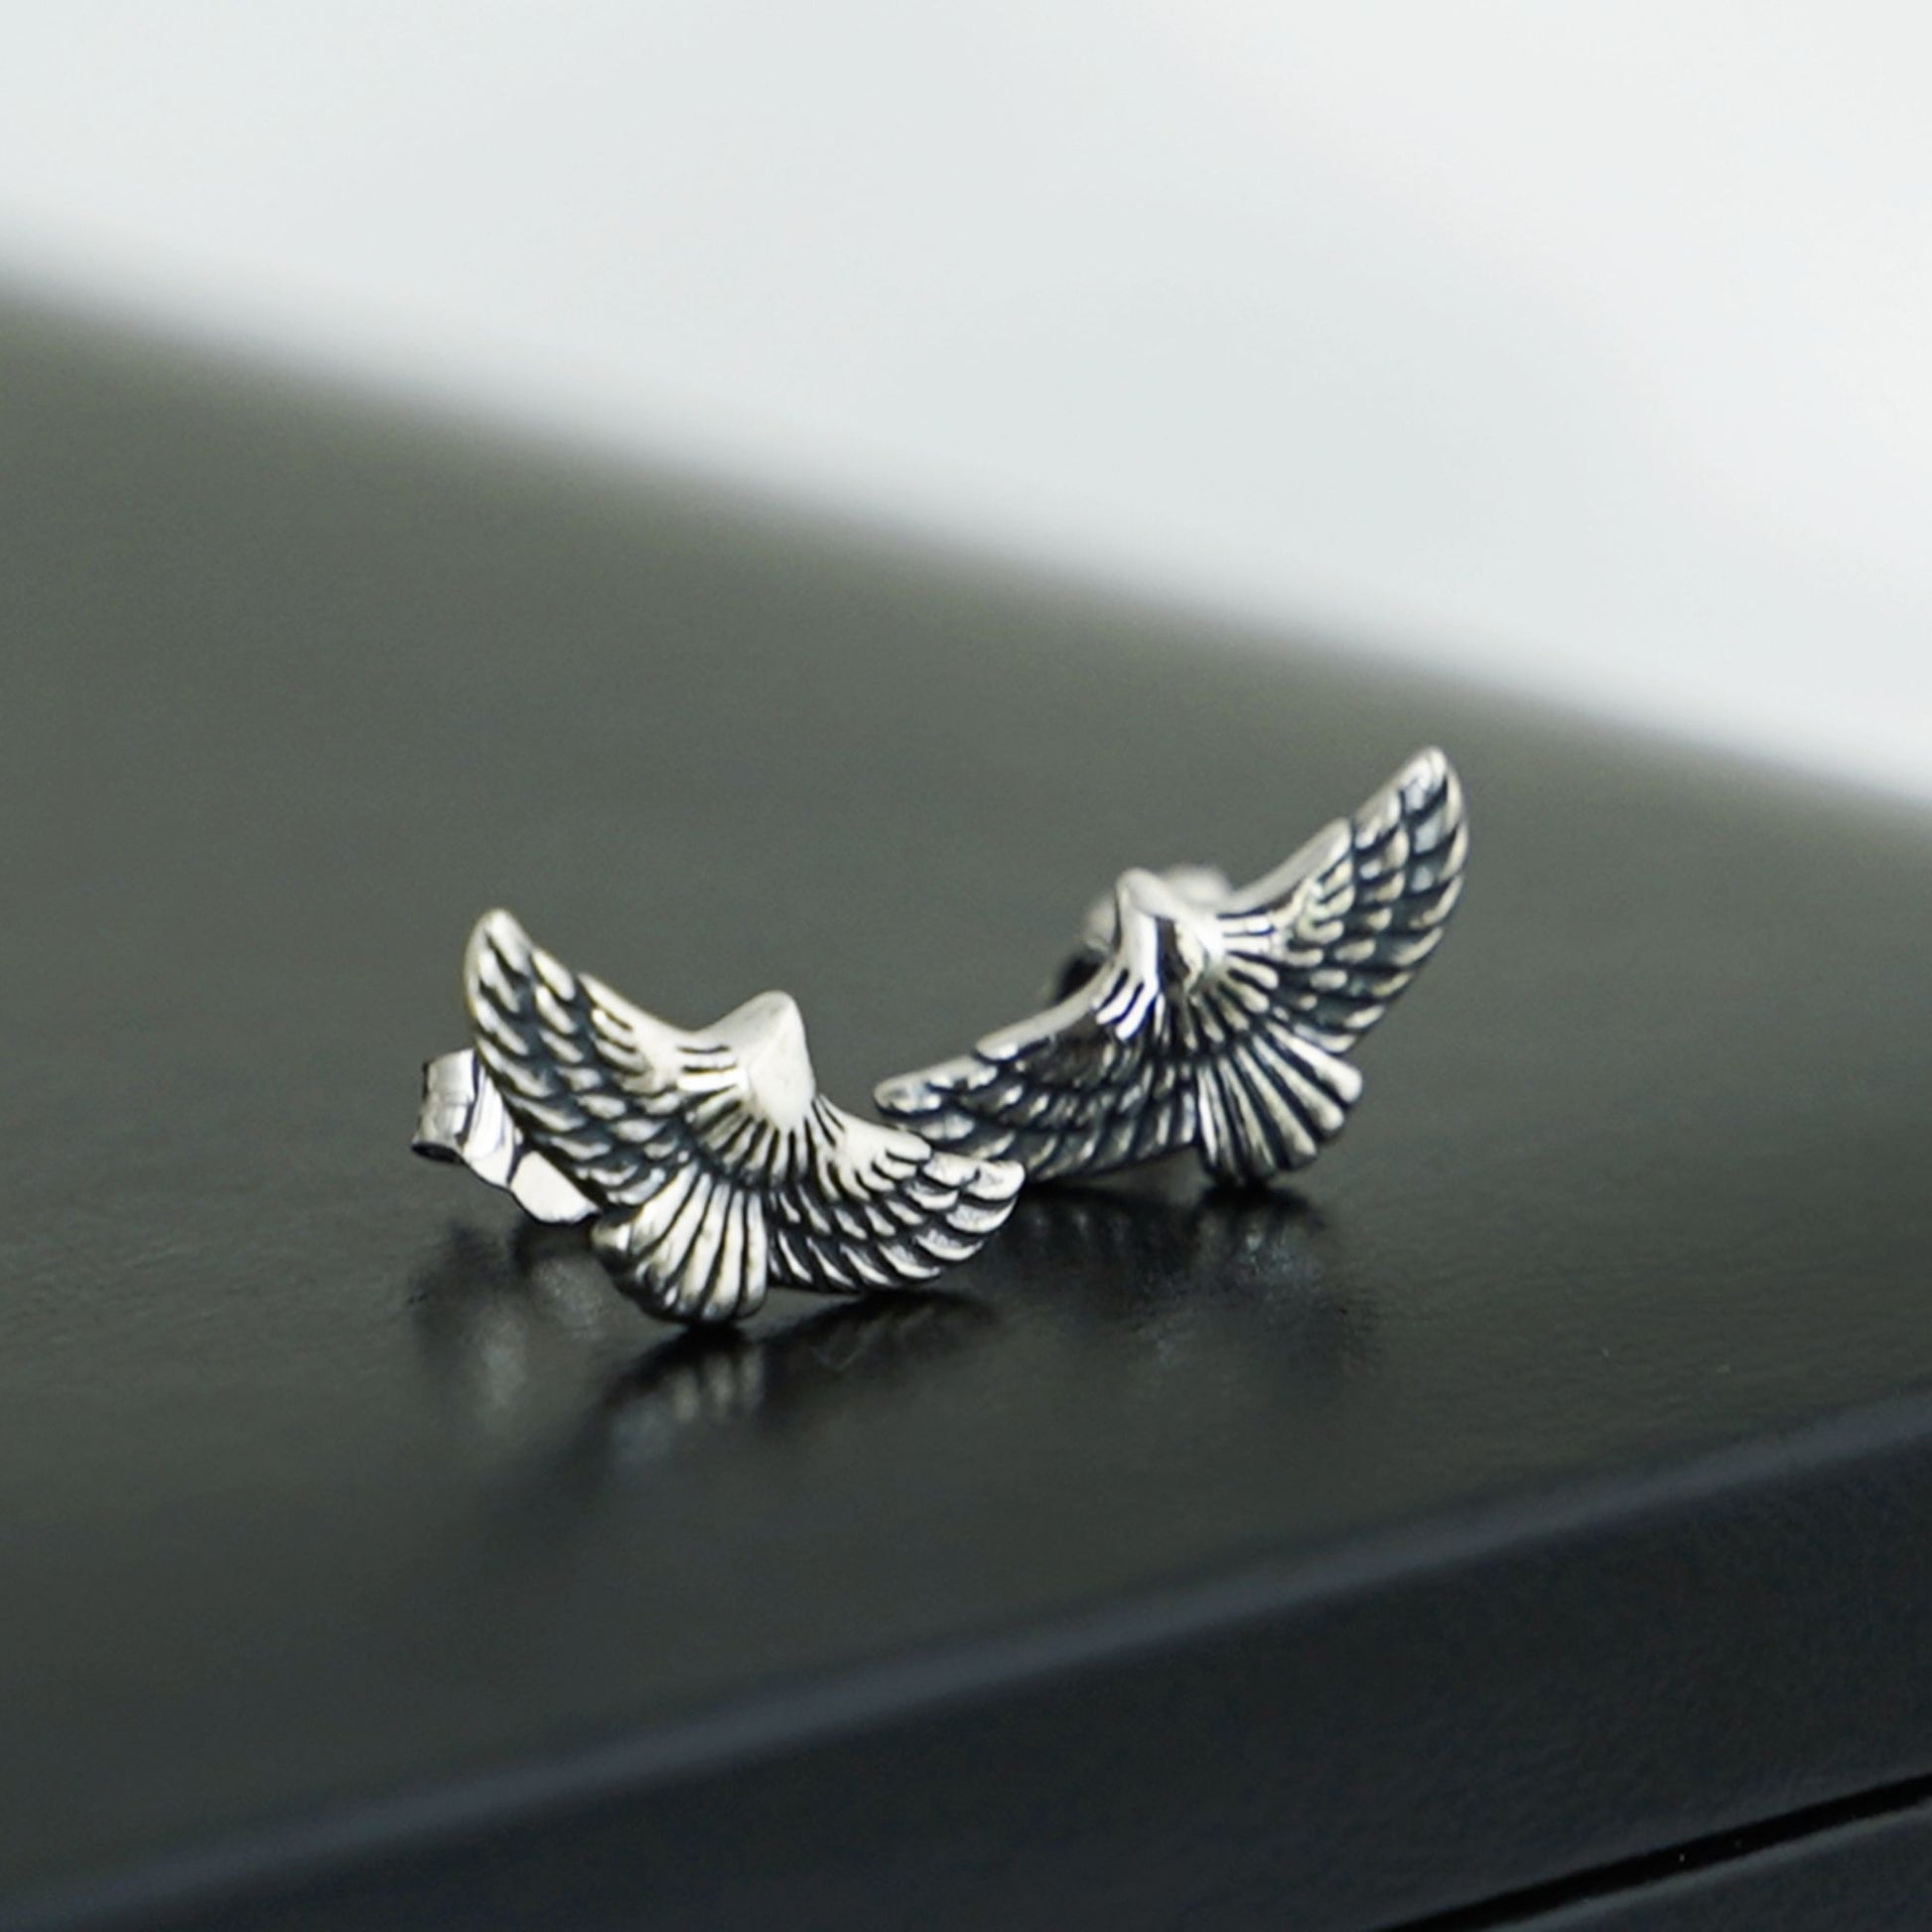 Sterling Silver Oxidized Wing Earrings with Feather Detail in Earring Boxed - sugarkittenlondon